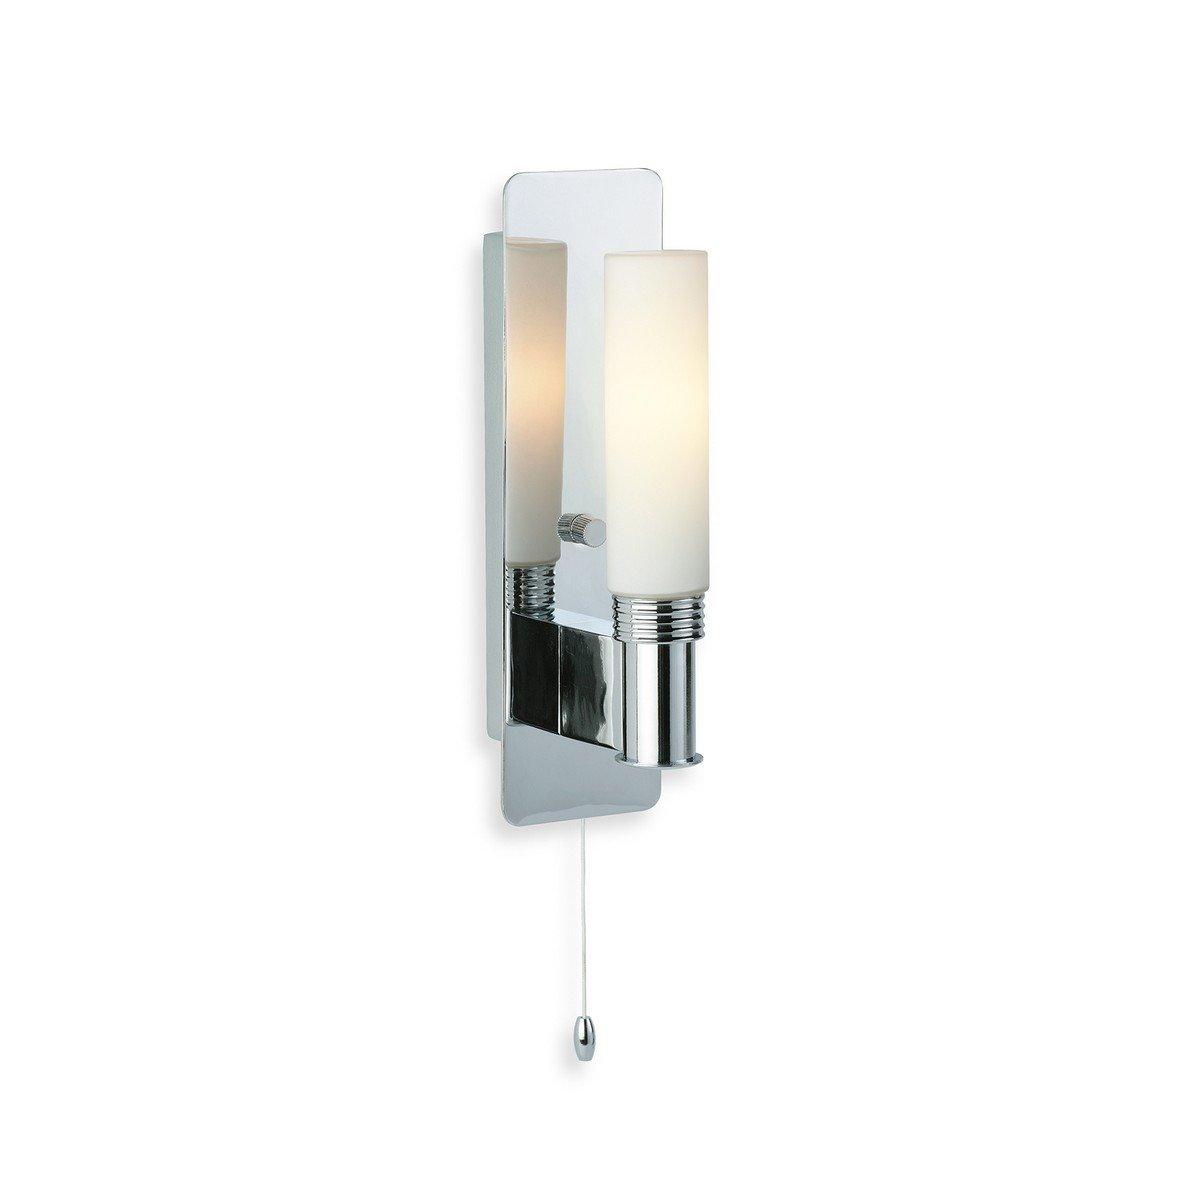 Spa 1 Light Single Bathroom Ceiling Switched Wall Light Chrome Opal Glass IP44 G9